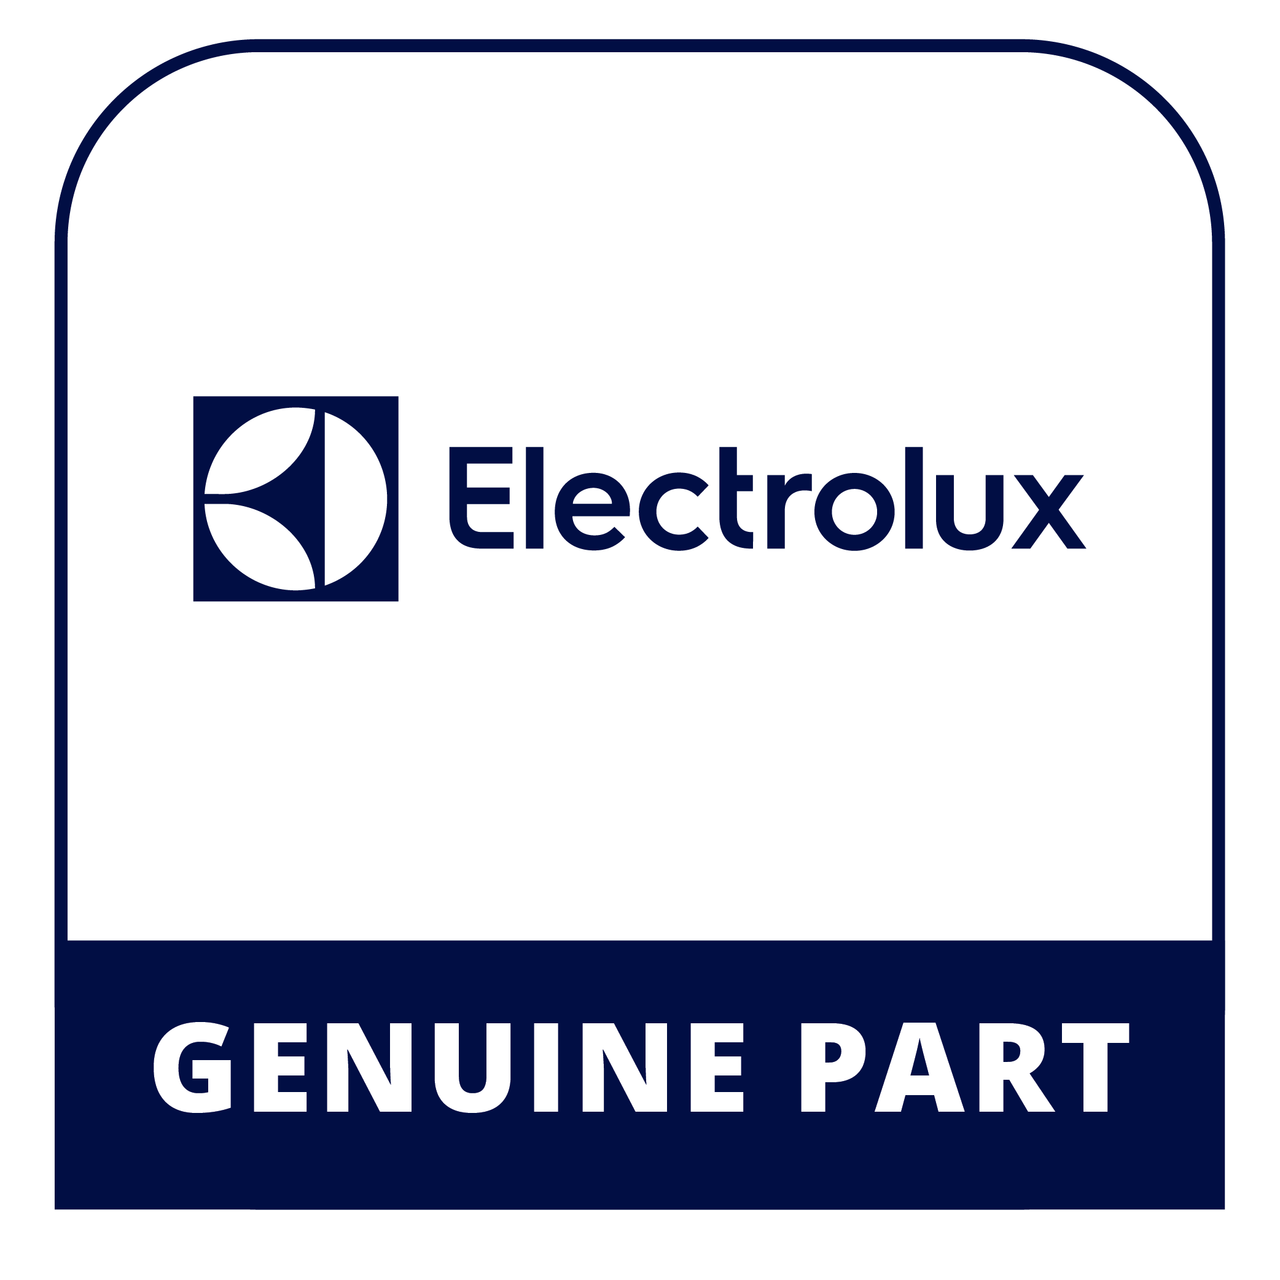 Frigidaire - Electrolux 316202608 Panel - Genuine Electrolux Part